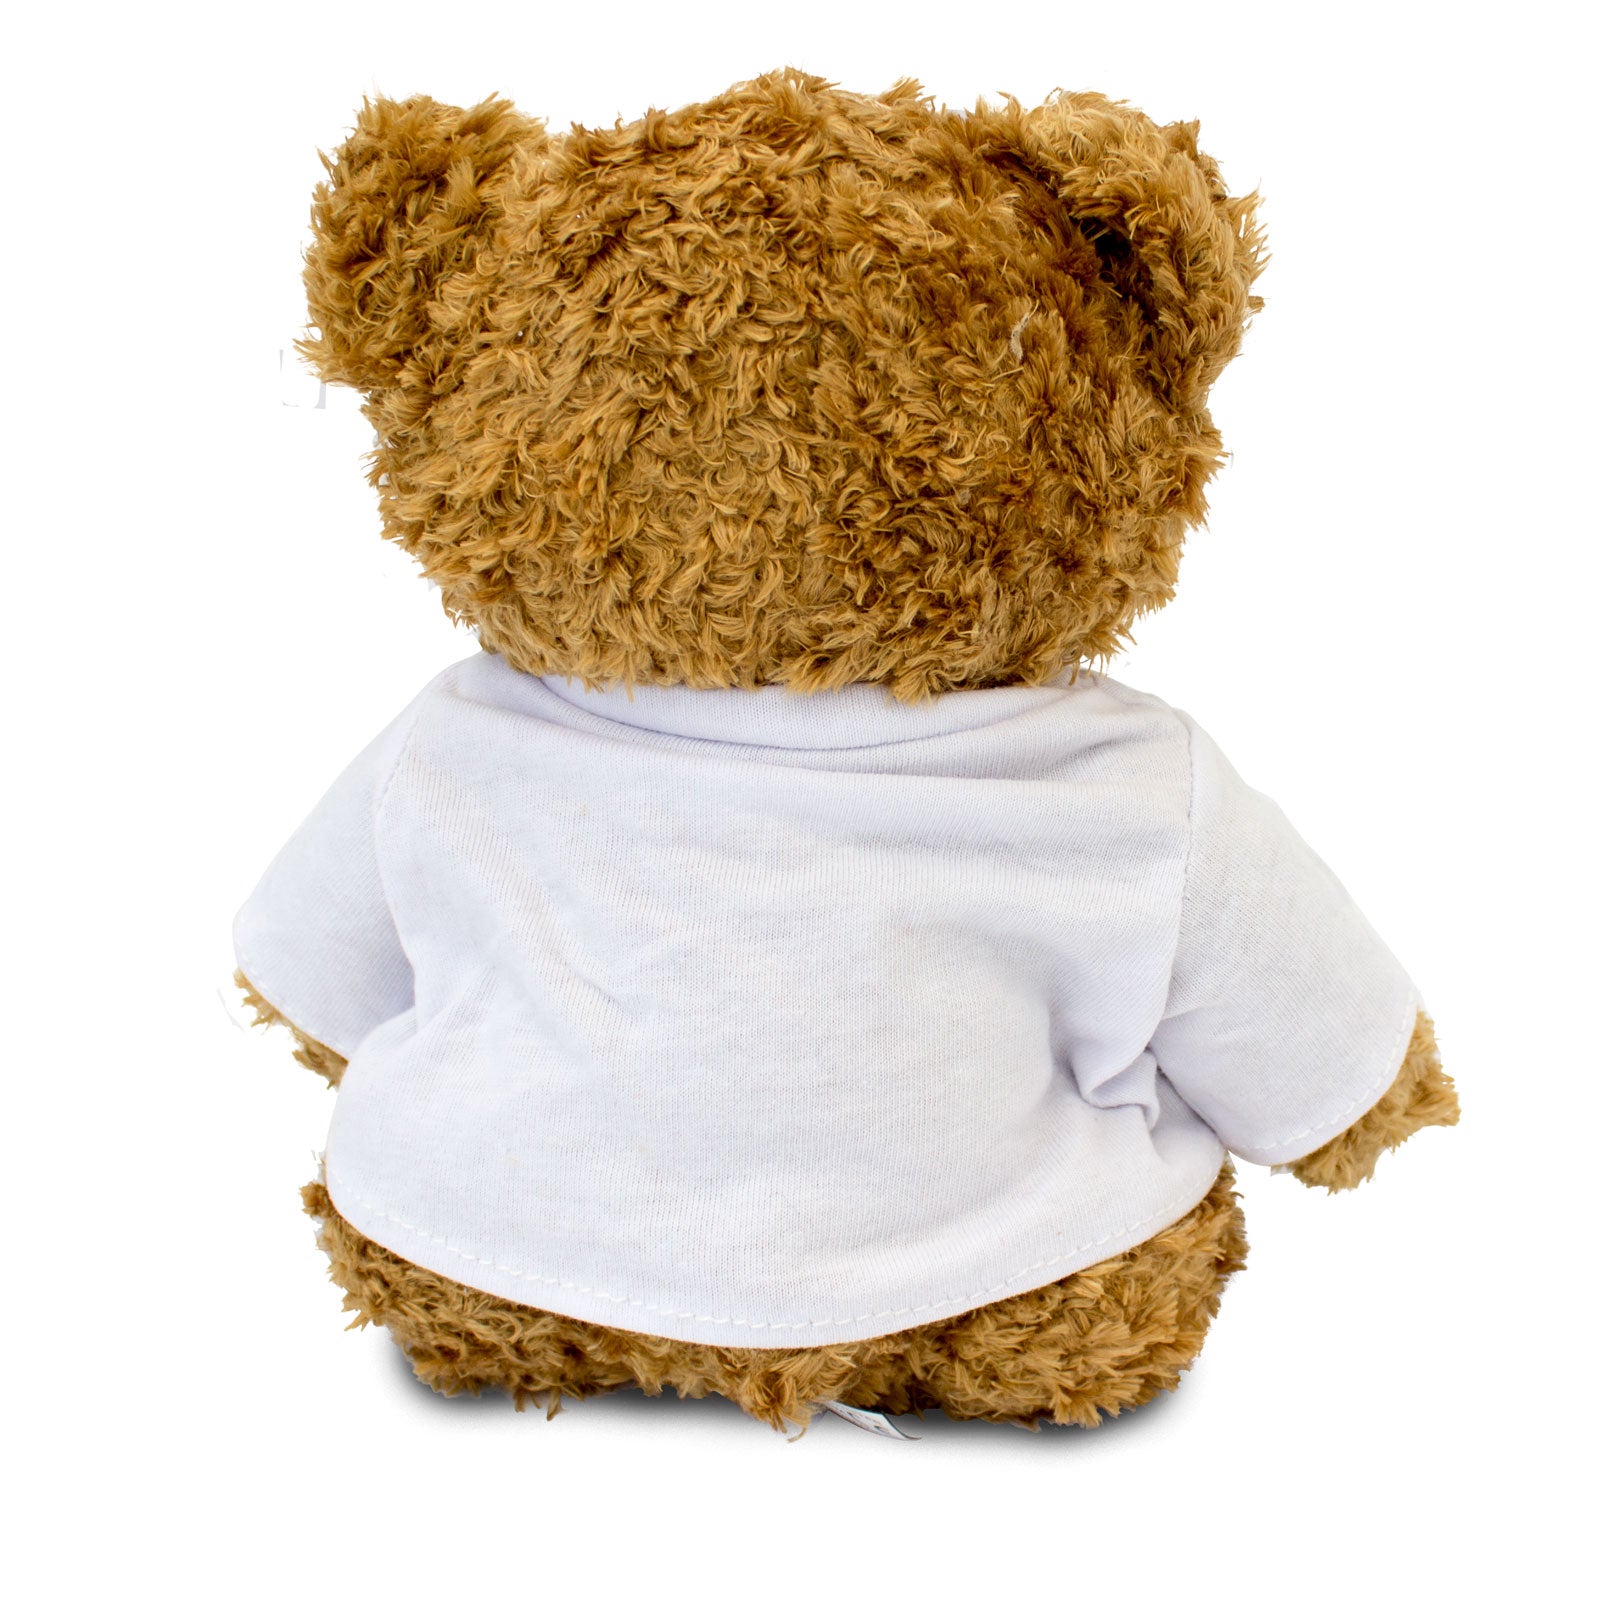 I Love Matthew - Teddy Bear